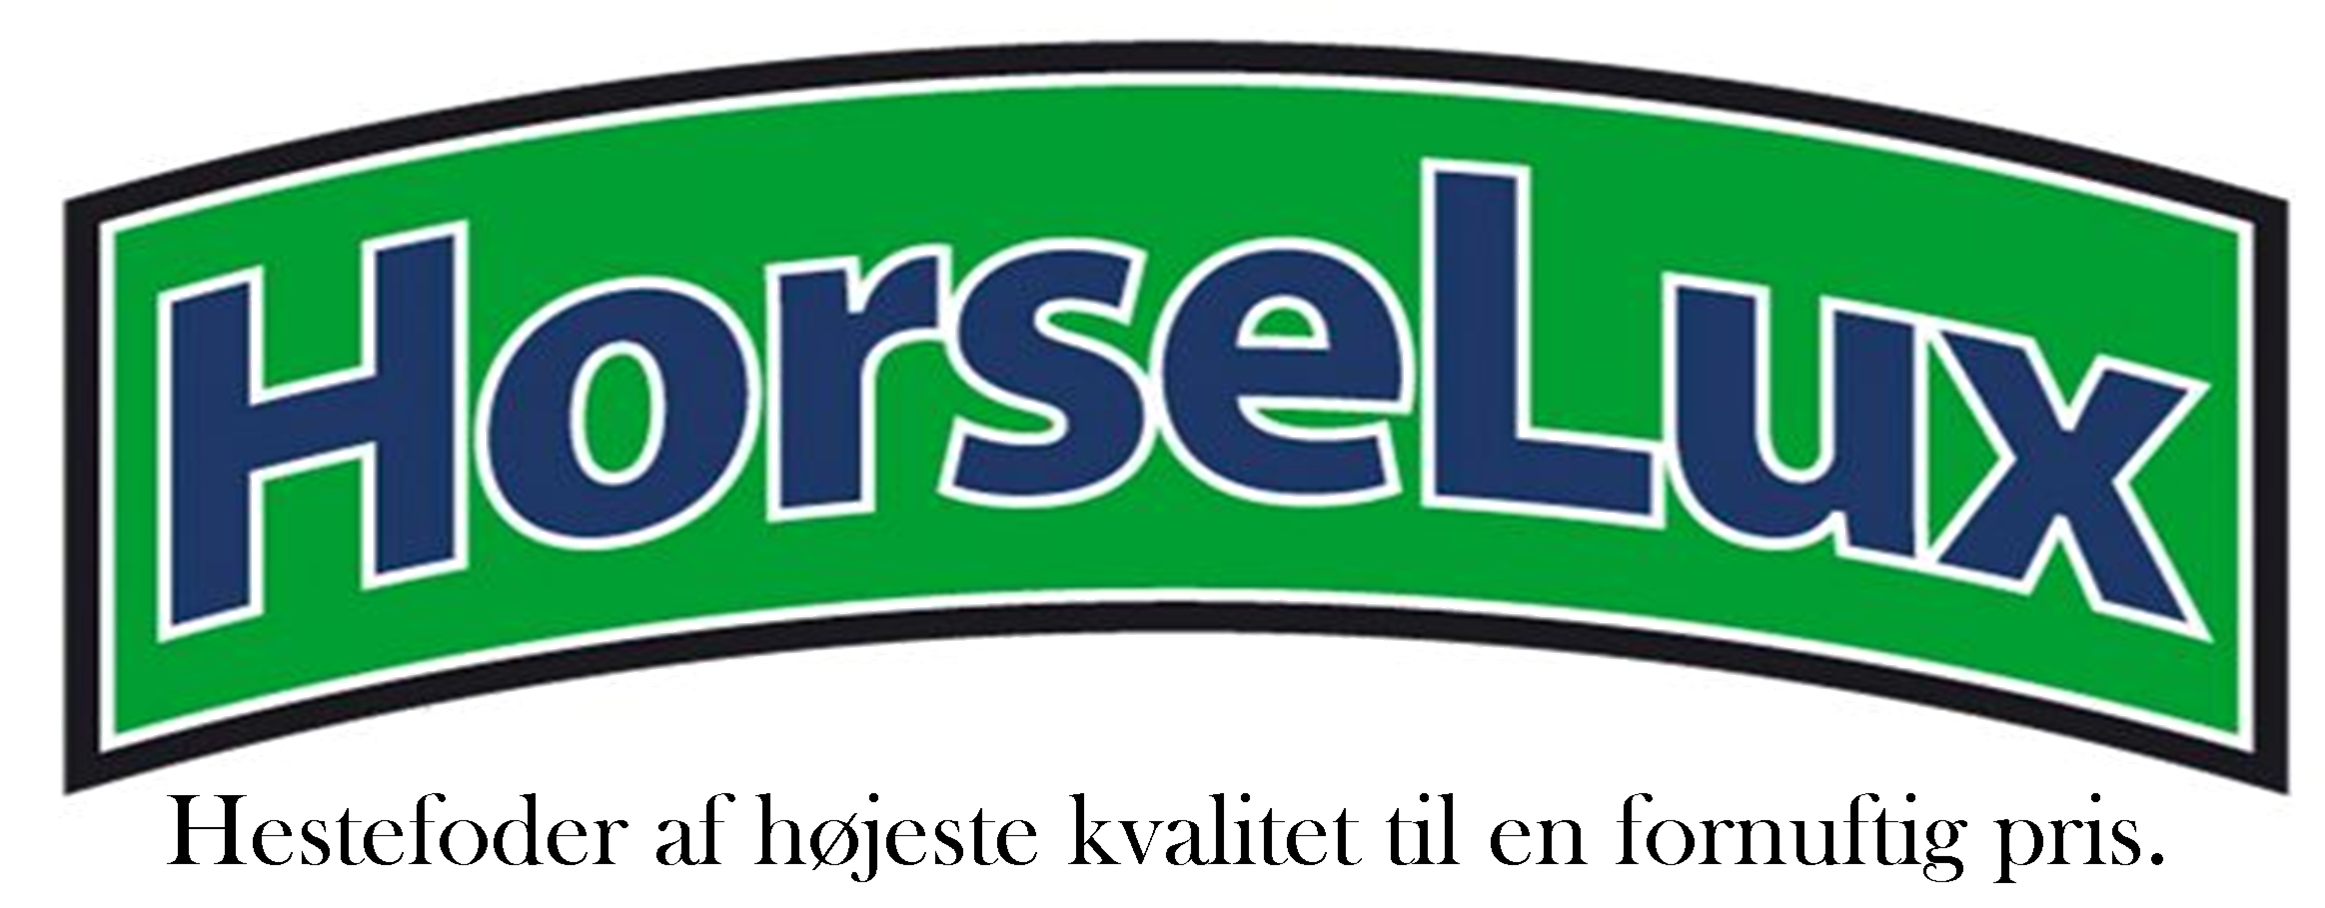 horselux_logo